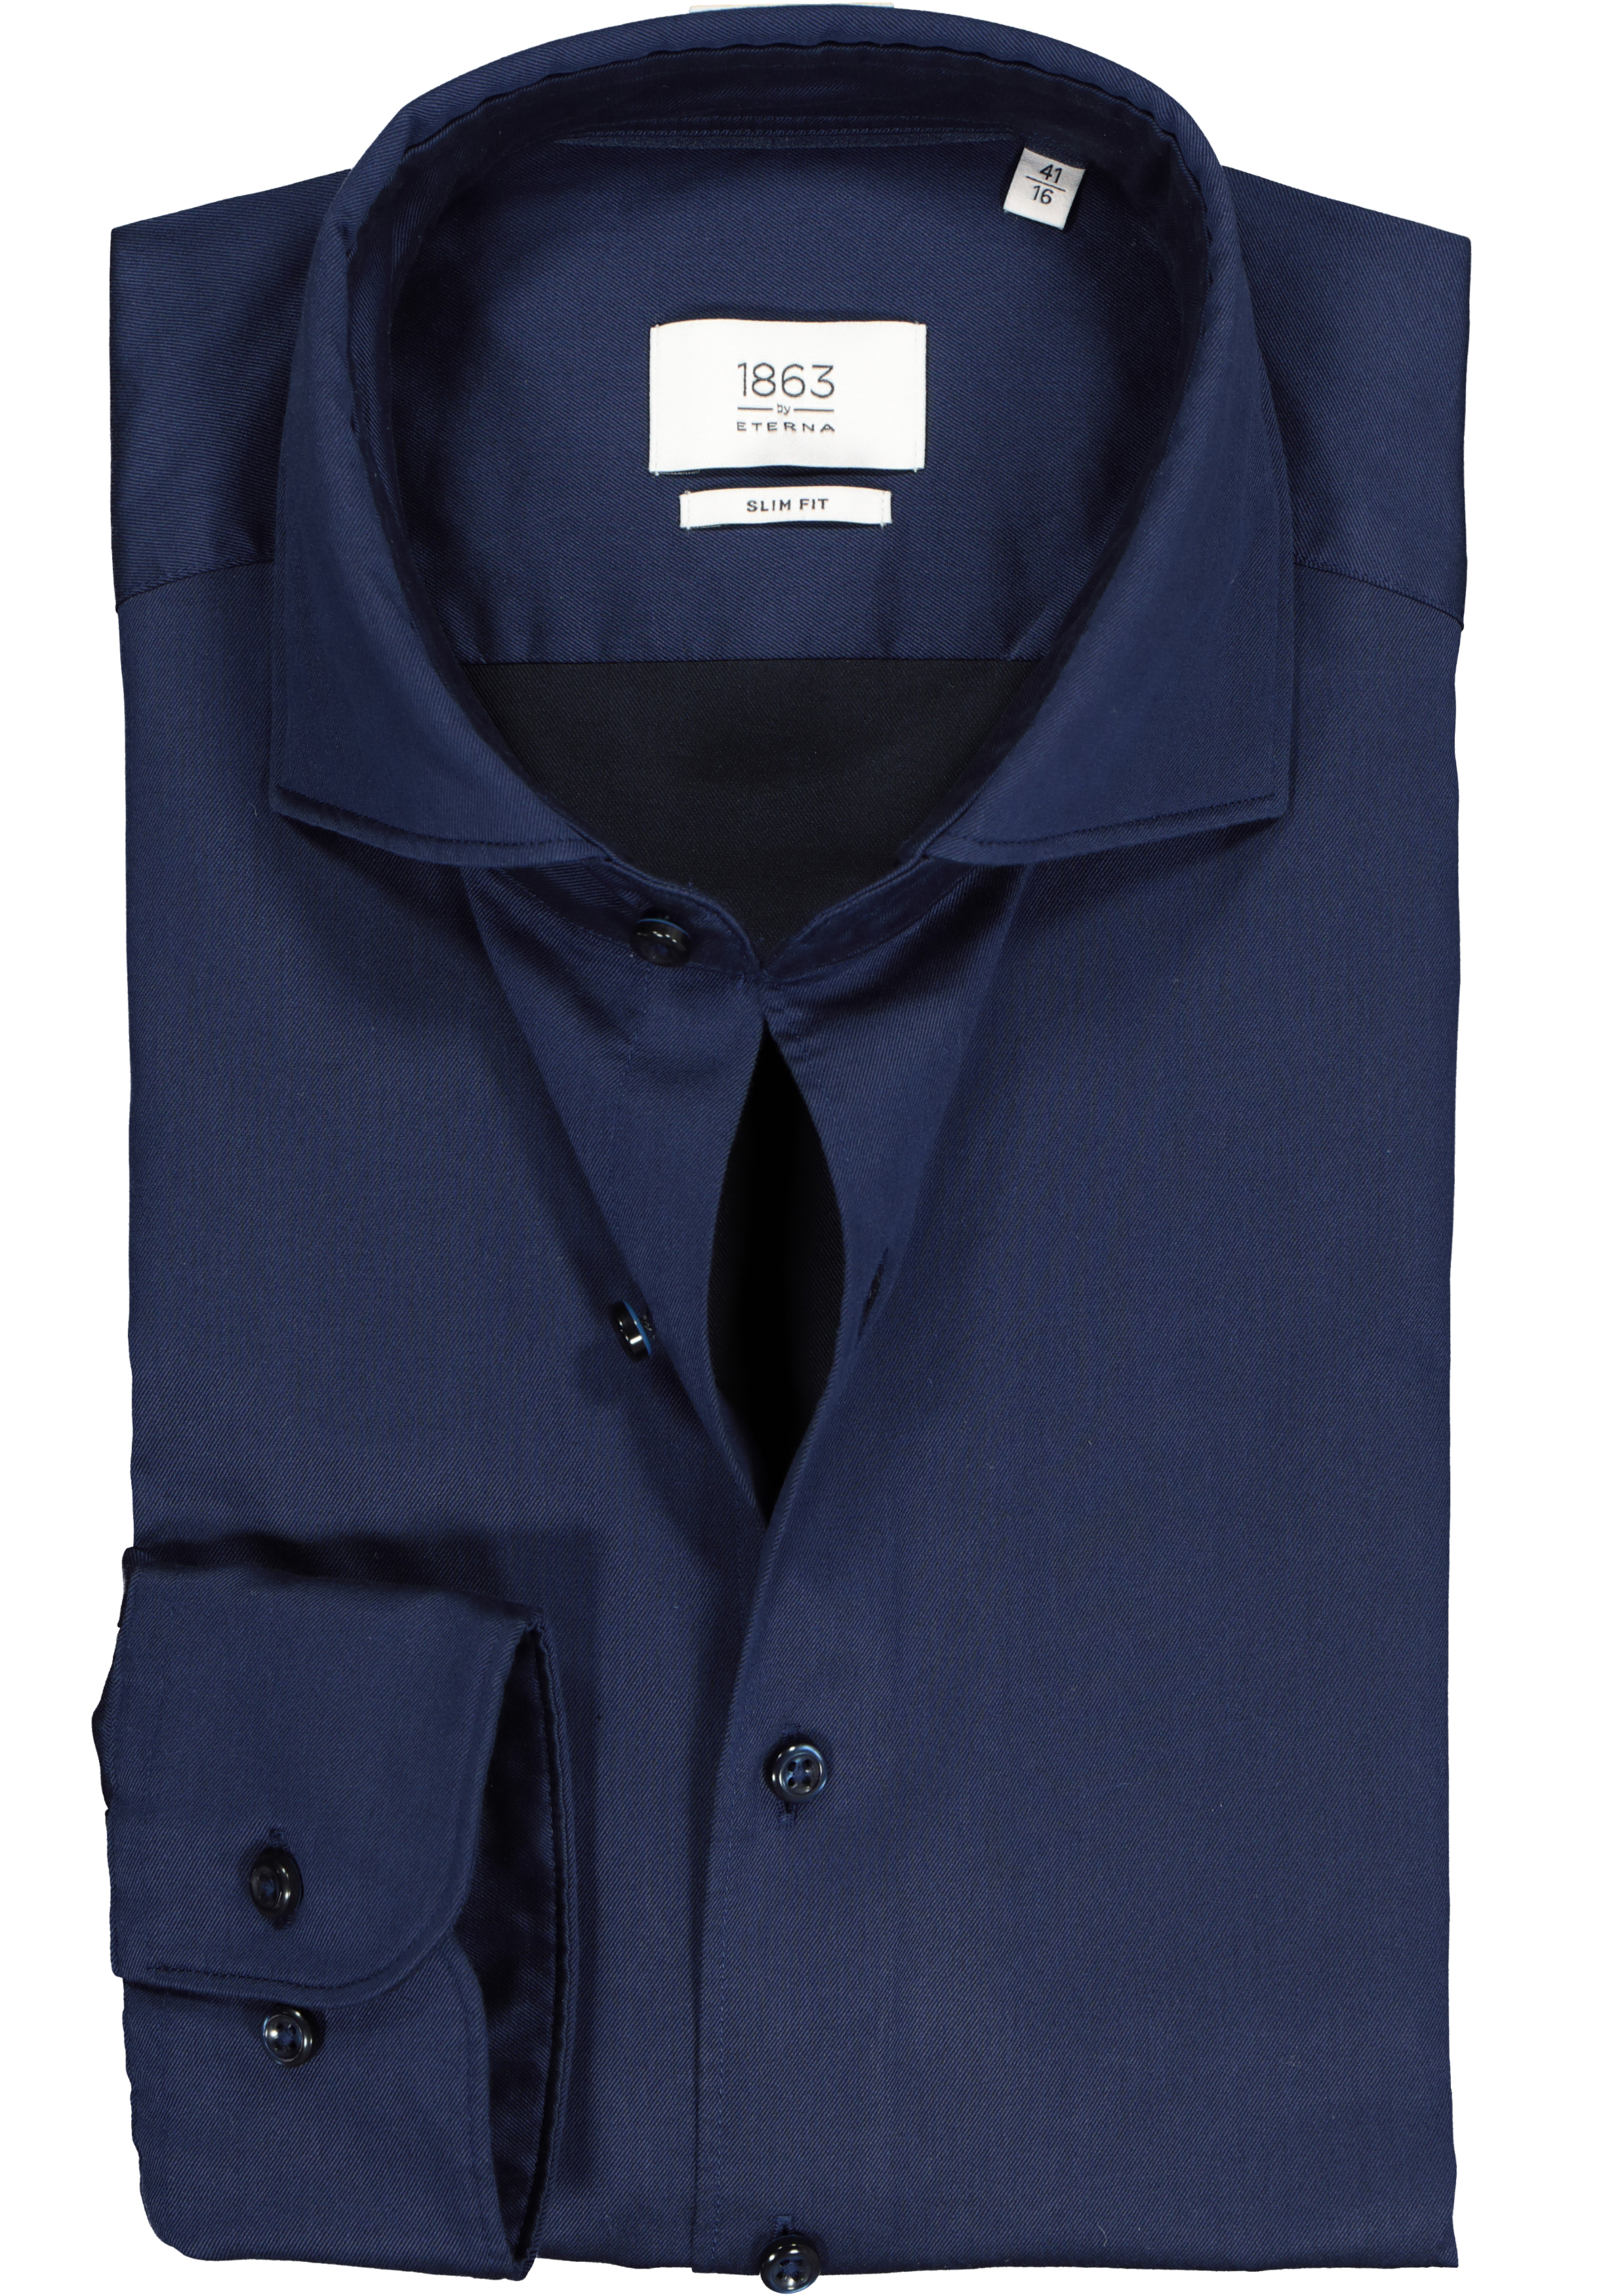 ETERNA 1863 slim fit casual Soft tailoring overhemd, twill heren overhemd, donkerblauw